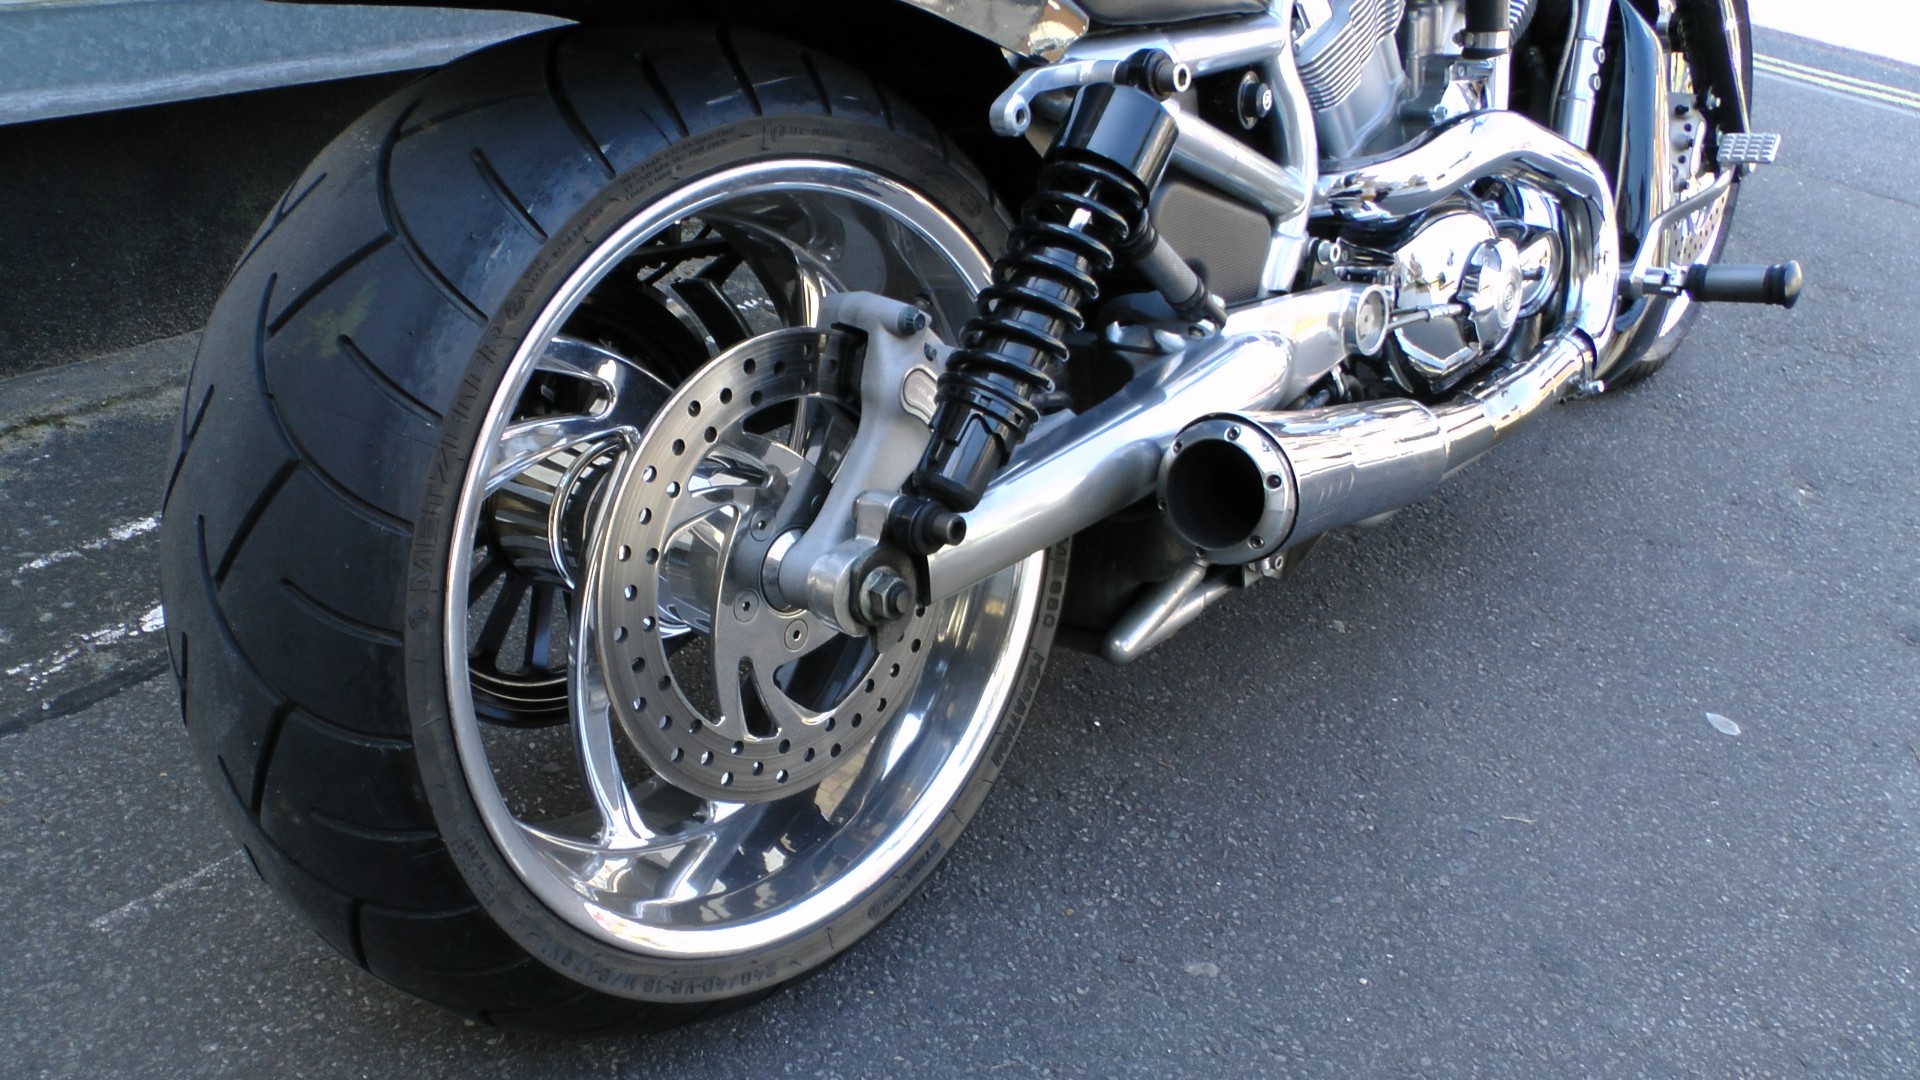 Harley Davidson Motorcycle Exhaust Free Stock Photo - Public Domain